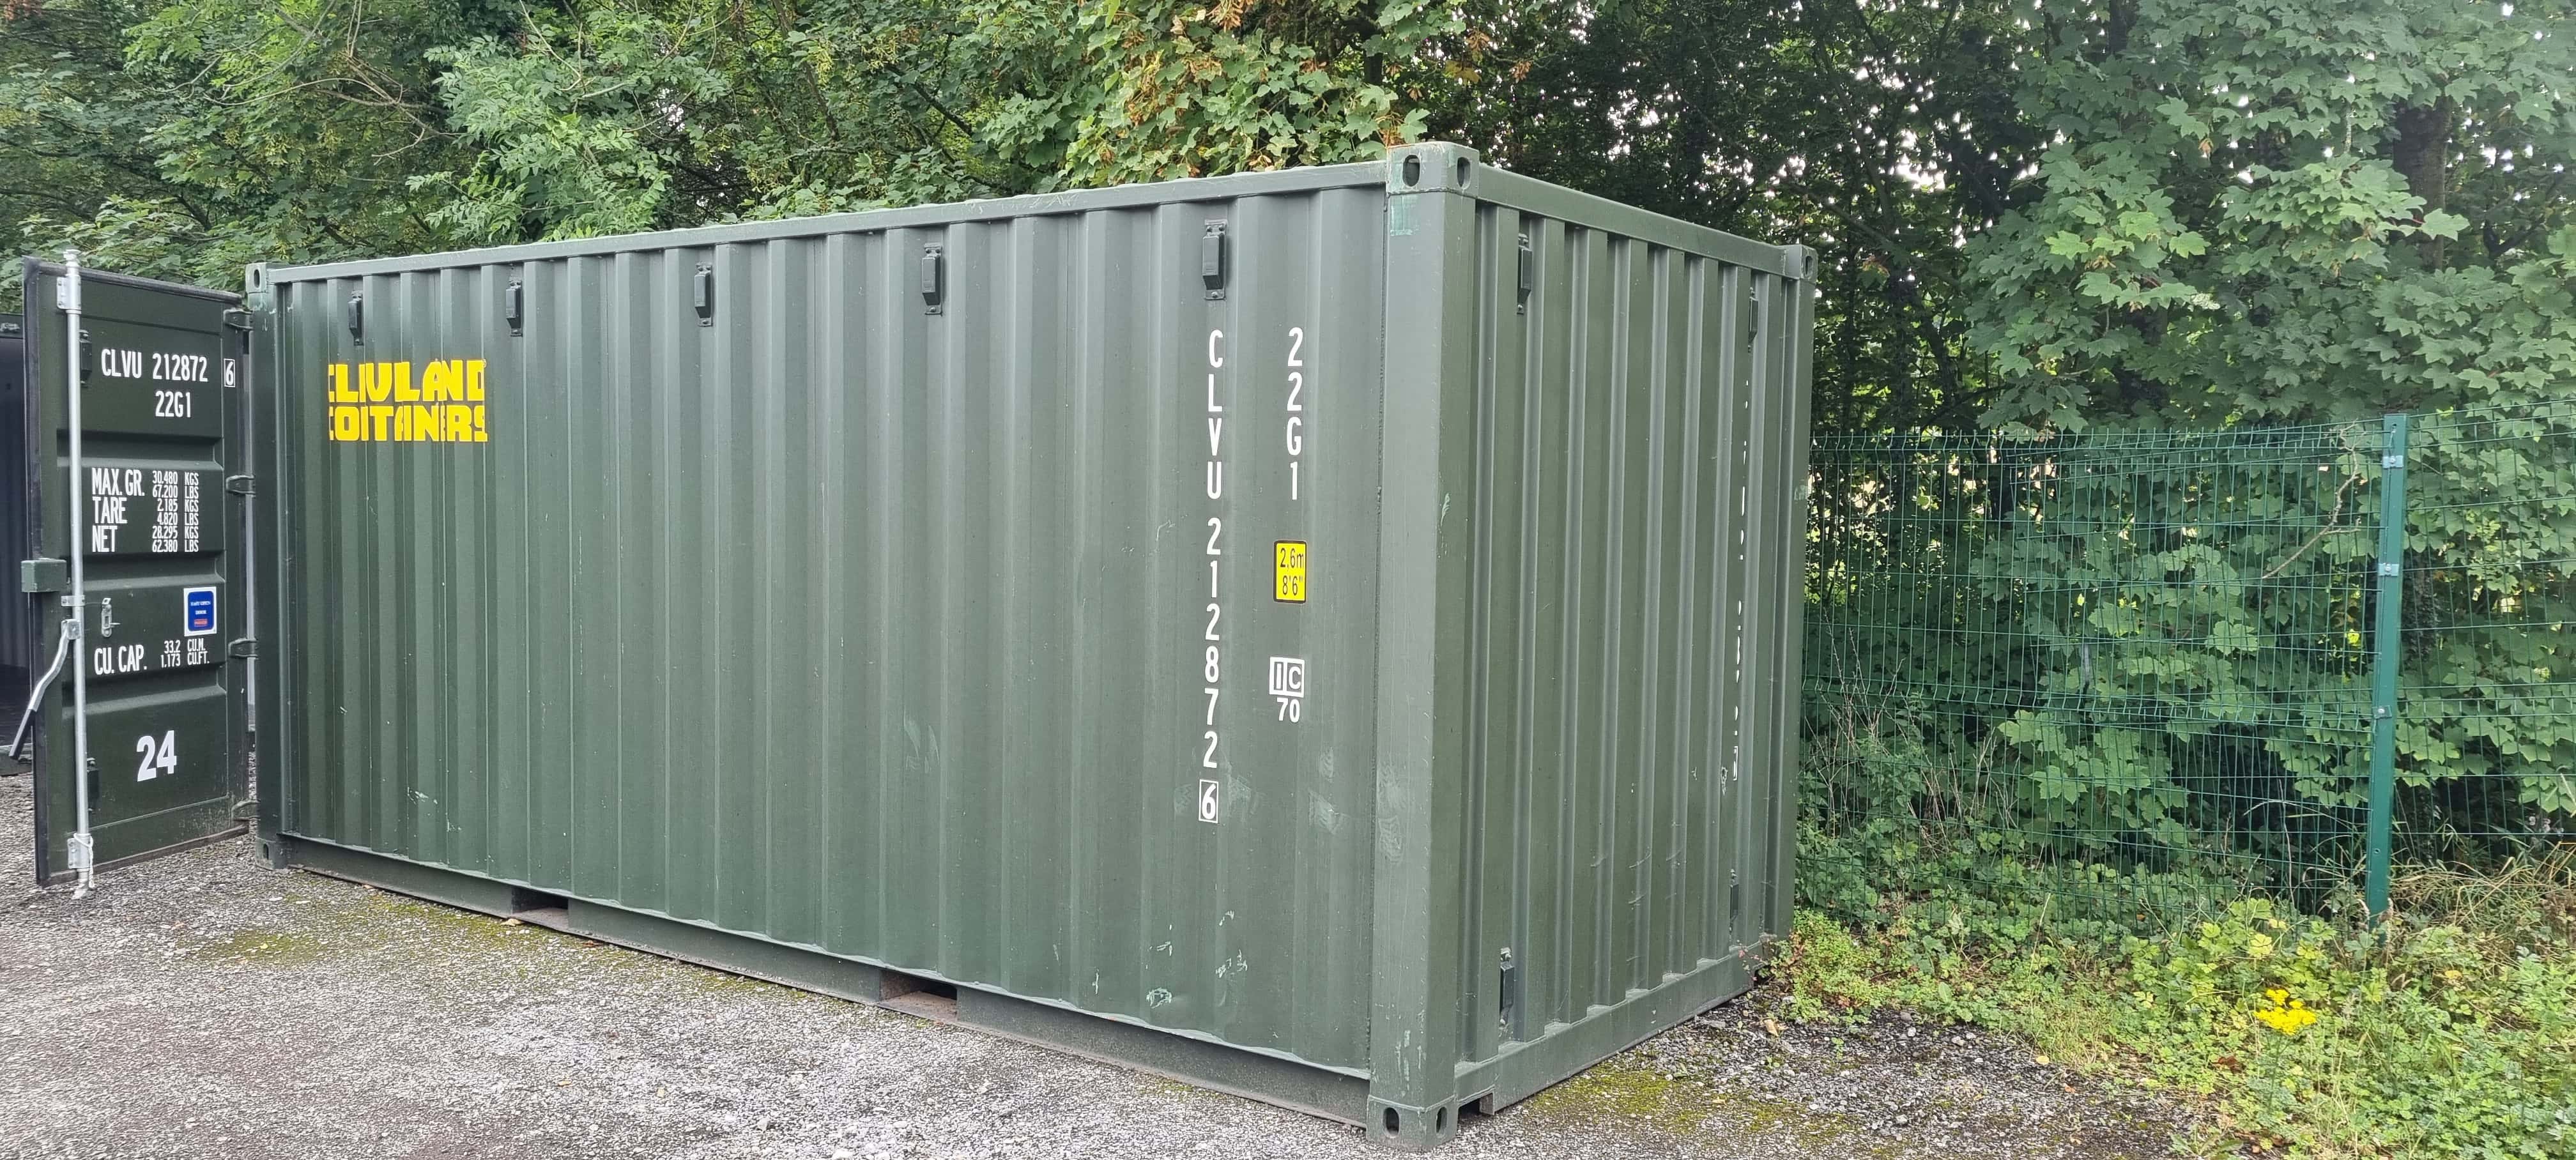 Cuboid Self Storage Eccleston - Chorley, UK, storage units nearby